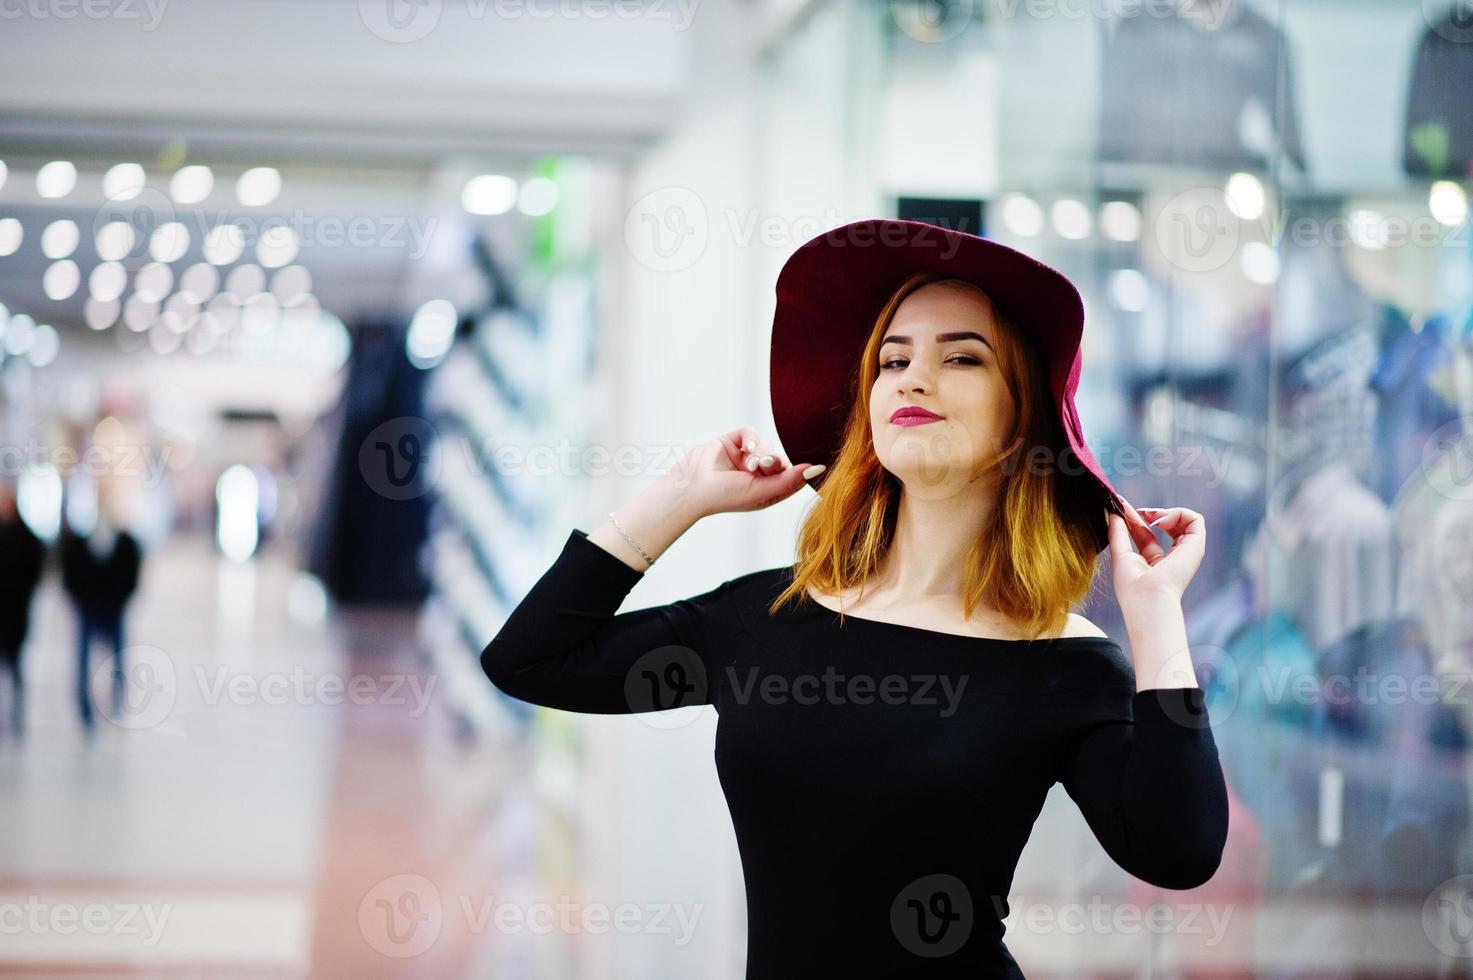 mode roodharige meisje slijtage op zwarte jurk en rode hoed gesteld op handel winkelcentrum. foto getinte stijl instagram filters.